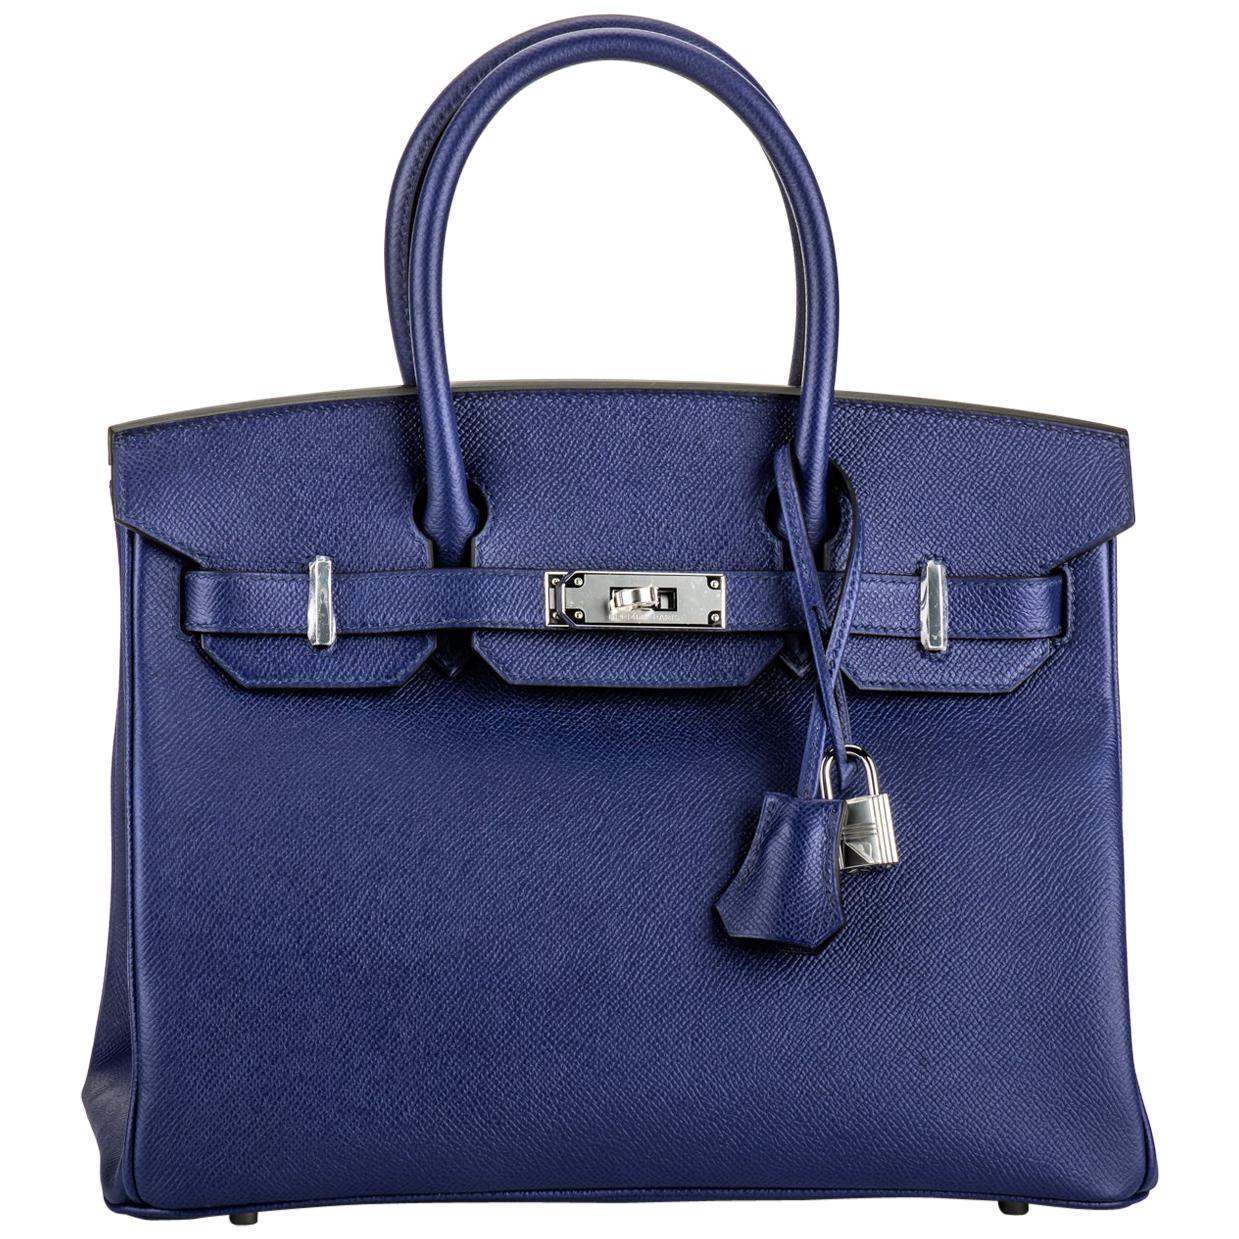 New in Box Hermes Blue Encre Birkin 30 Bag